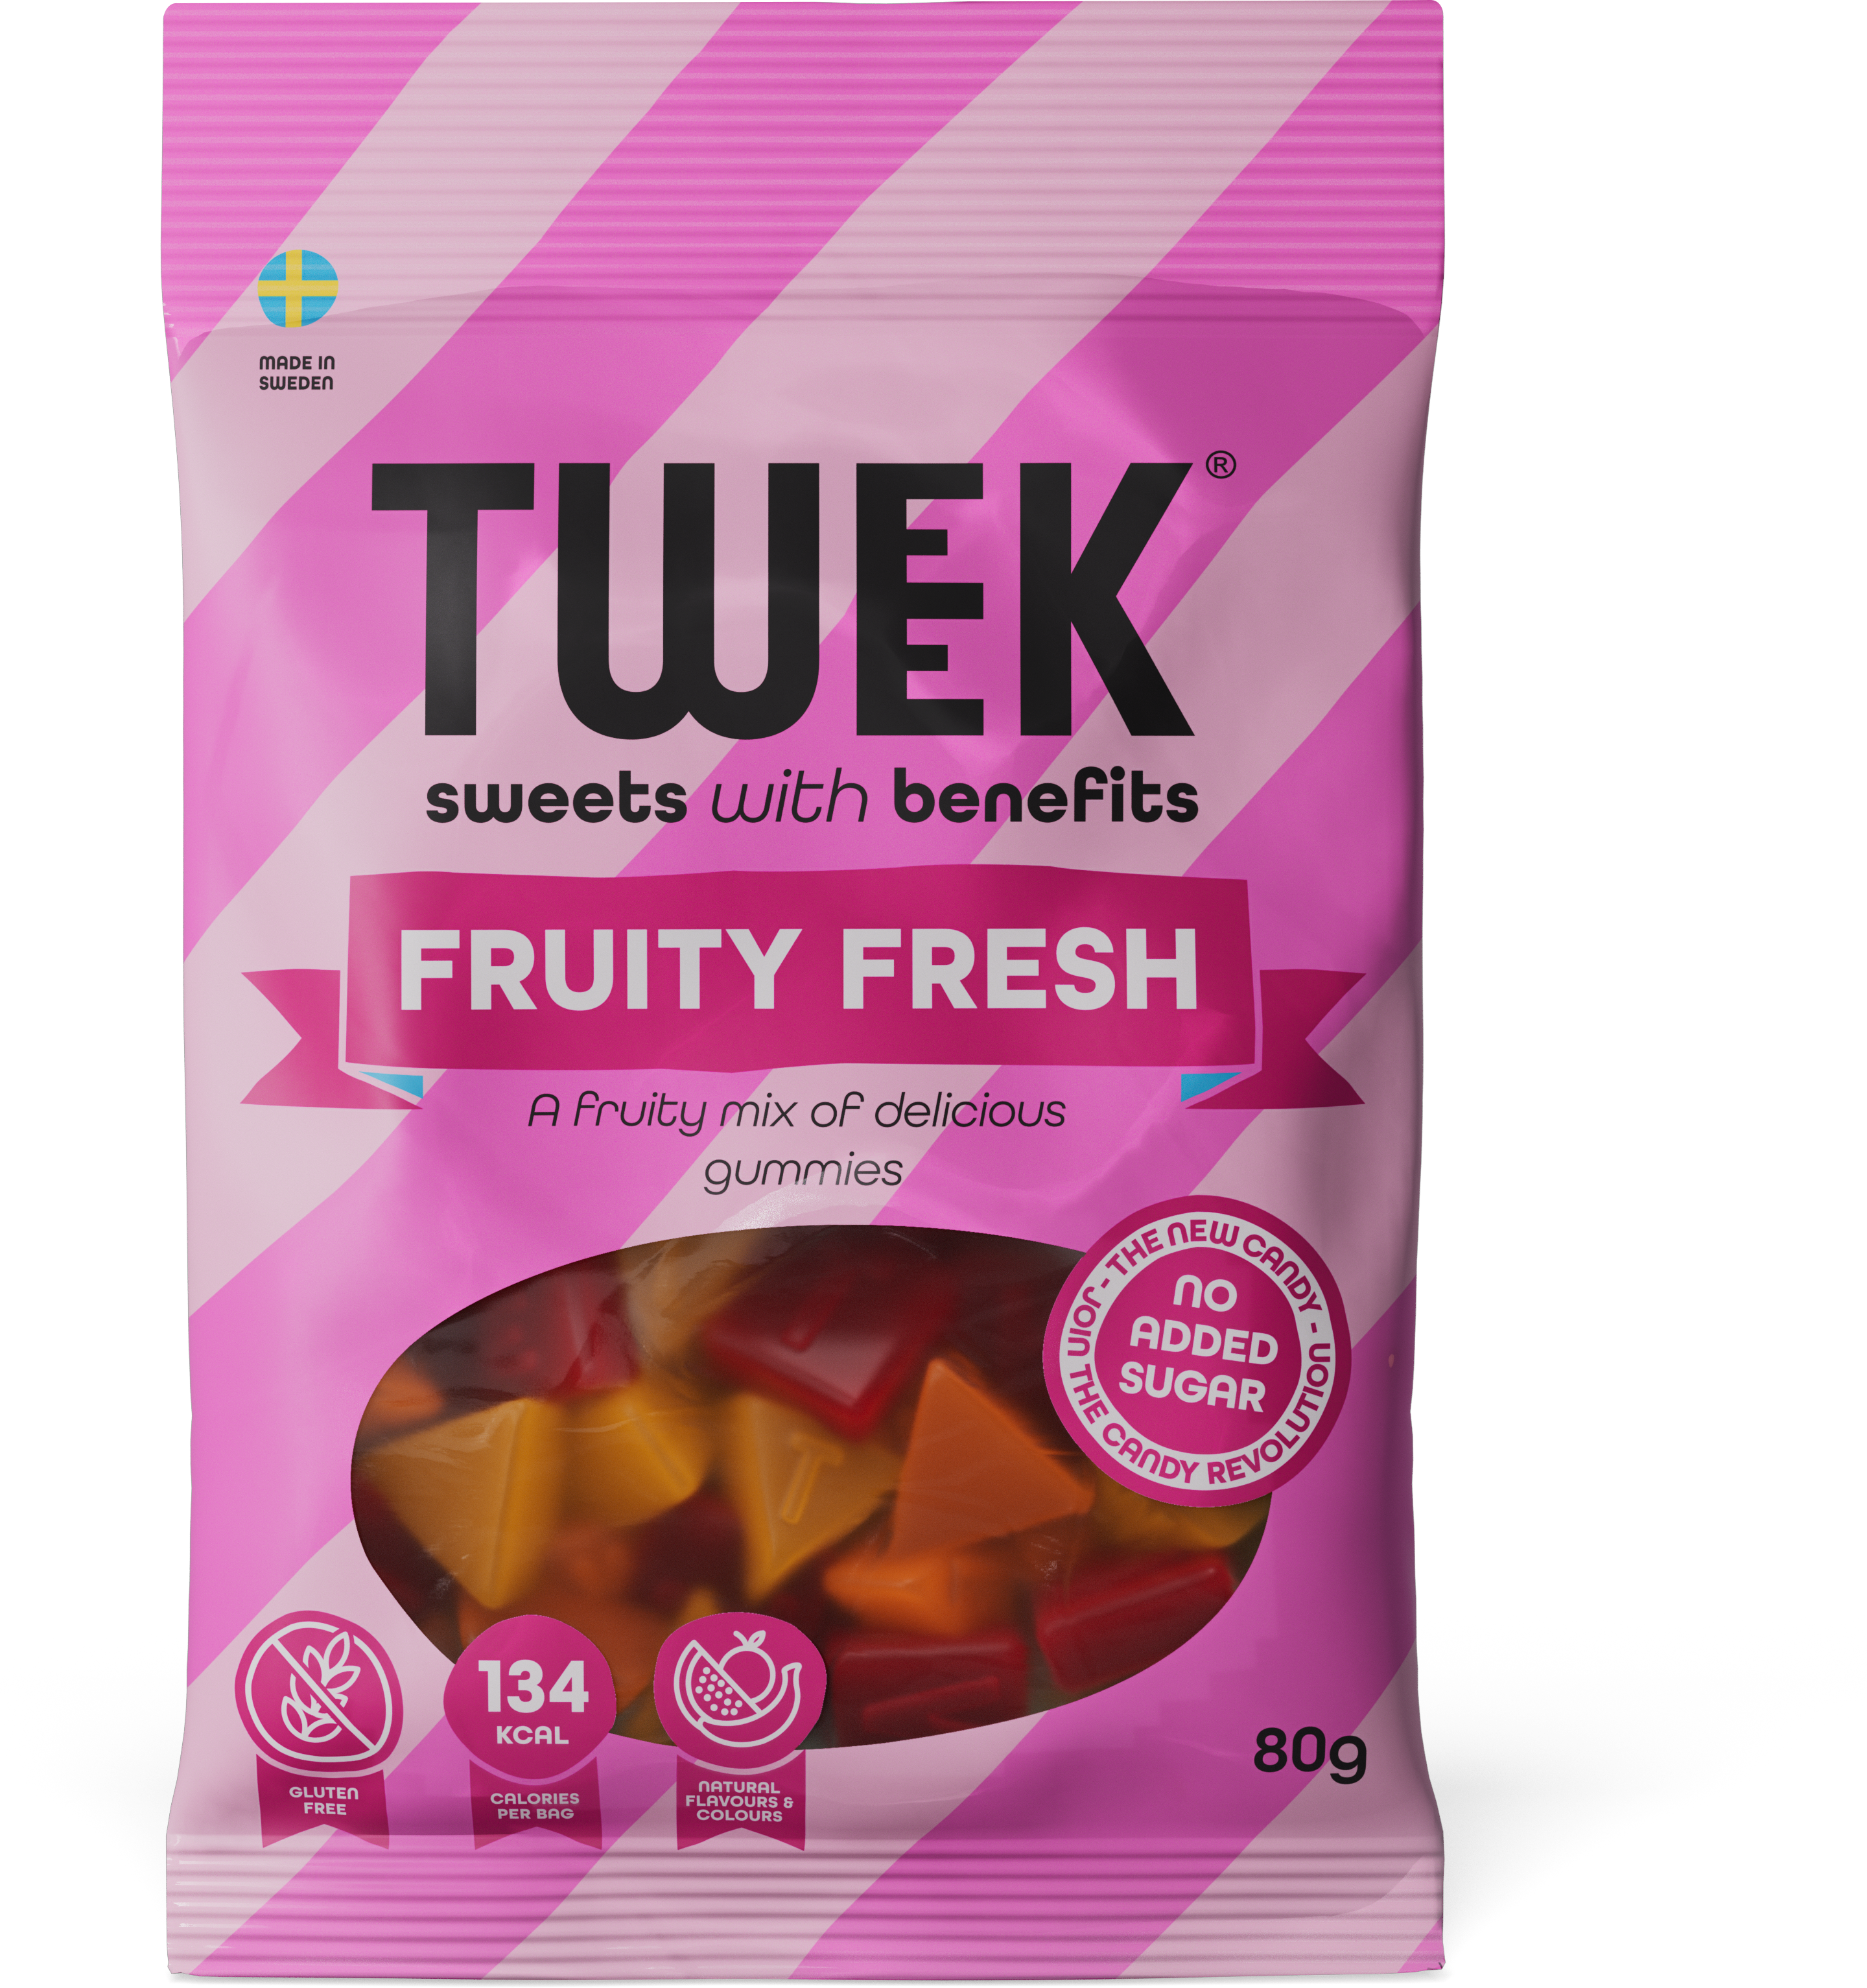 Tweek-FruityFresh